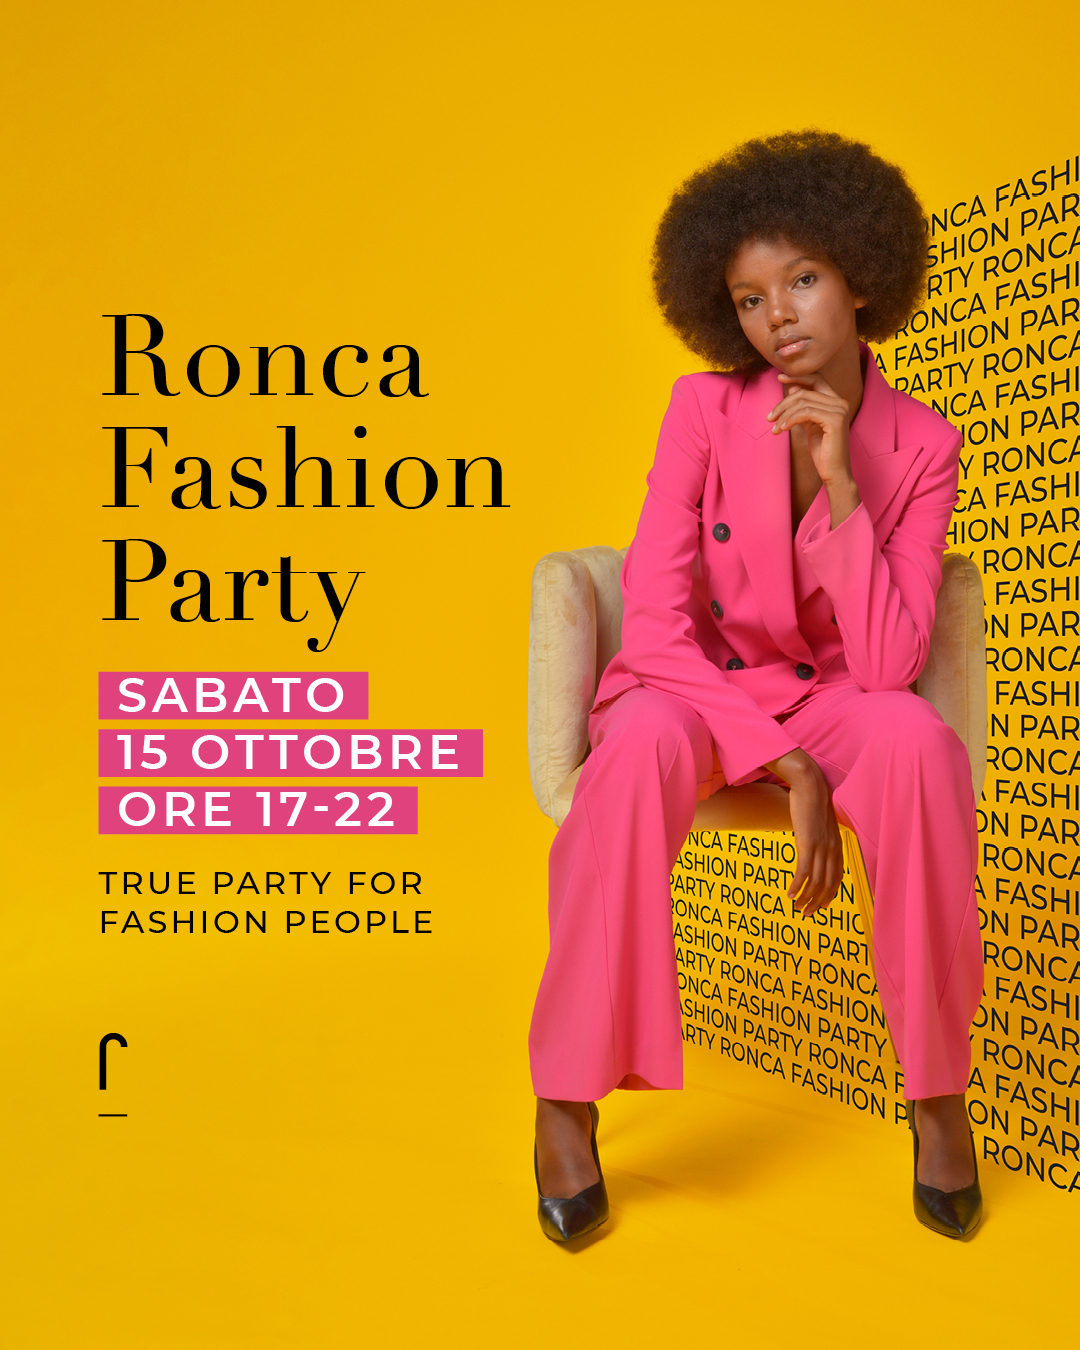 Ronca Fashion Party